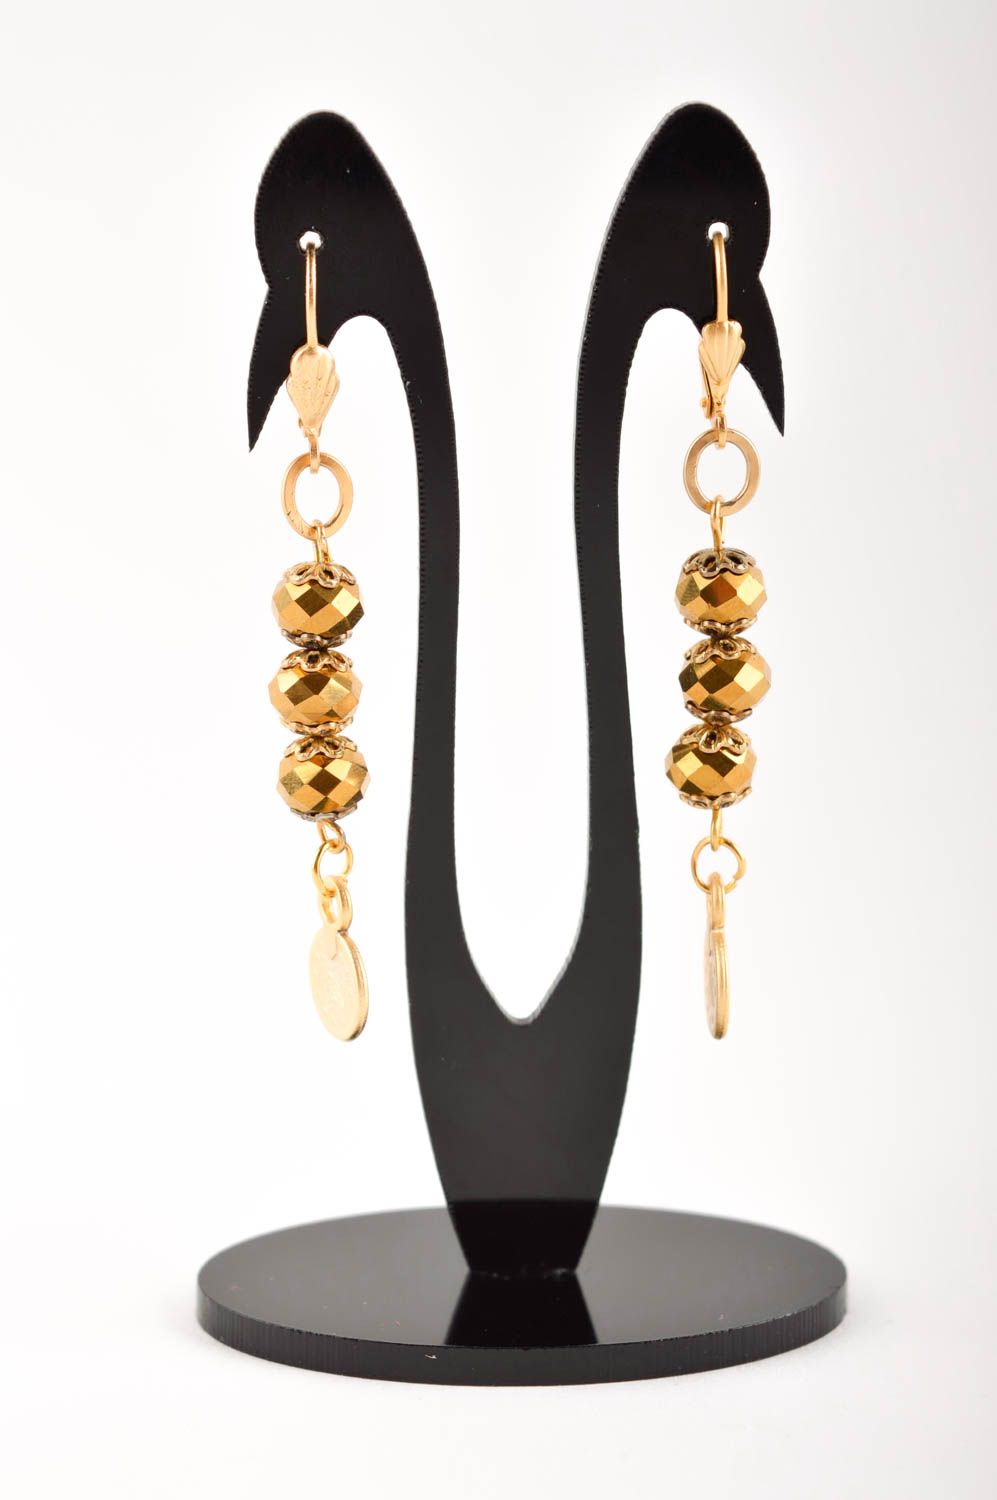 Handmade stylish earrings with beads long earrings with charms fashion jewelry photo 2